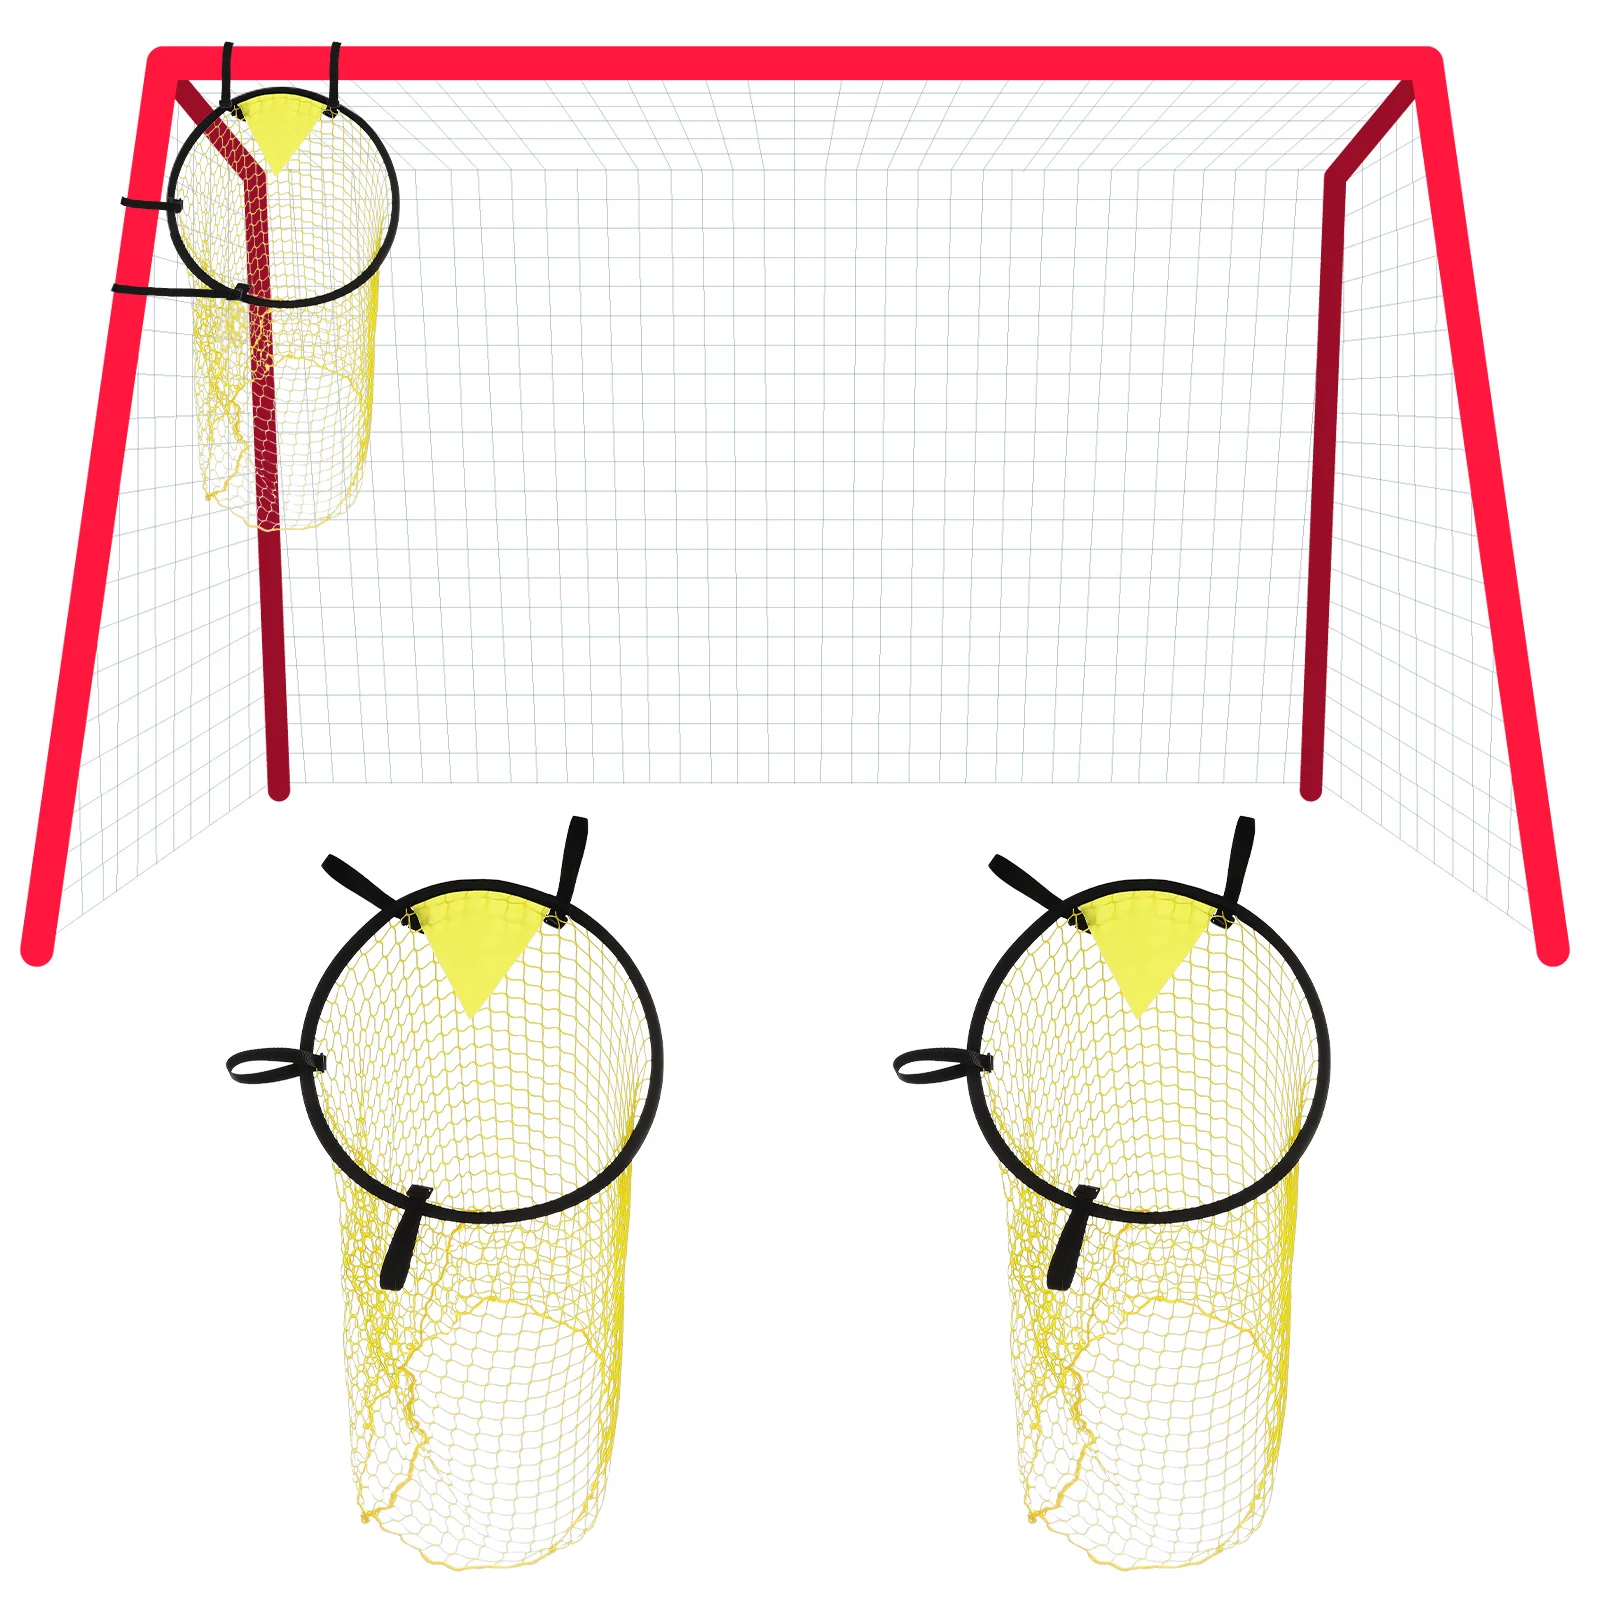 

2 Pcs Trash Can Football Goal Pocket Child Soccer Balls Nets for Kids Ages 10-12 Polyester Netting